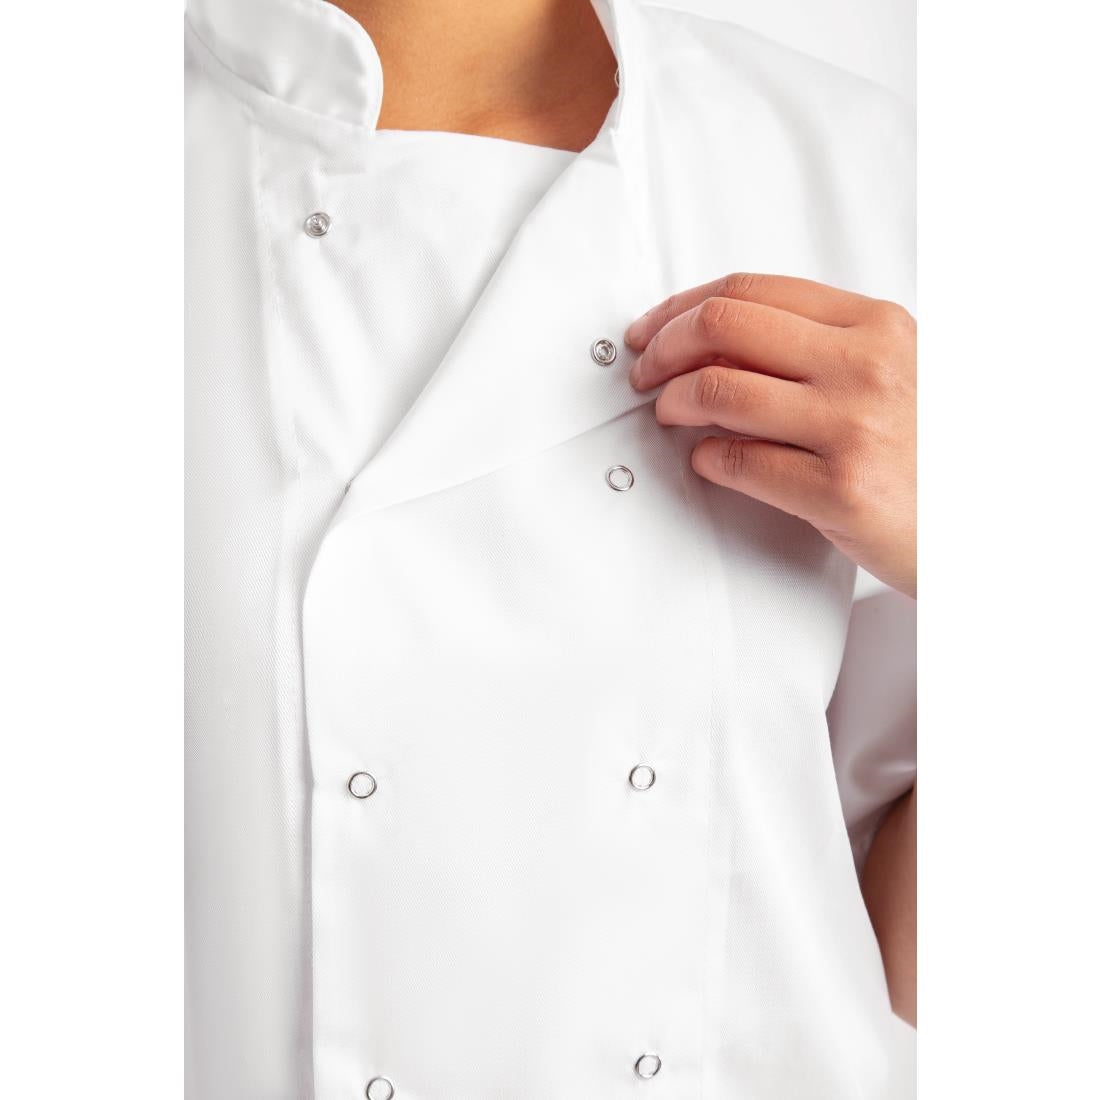 B250-M Whites Boston Unisex Short Sleeve Chefs Jacket White M JD Catering Equipment Solutions Ltd